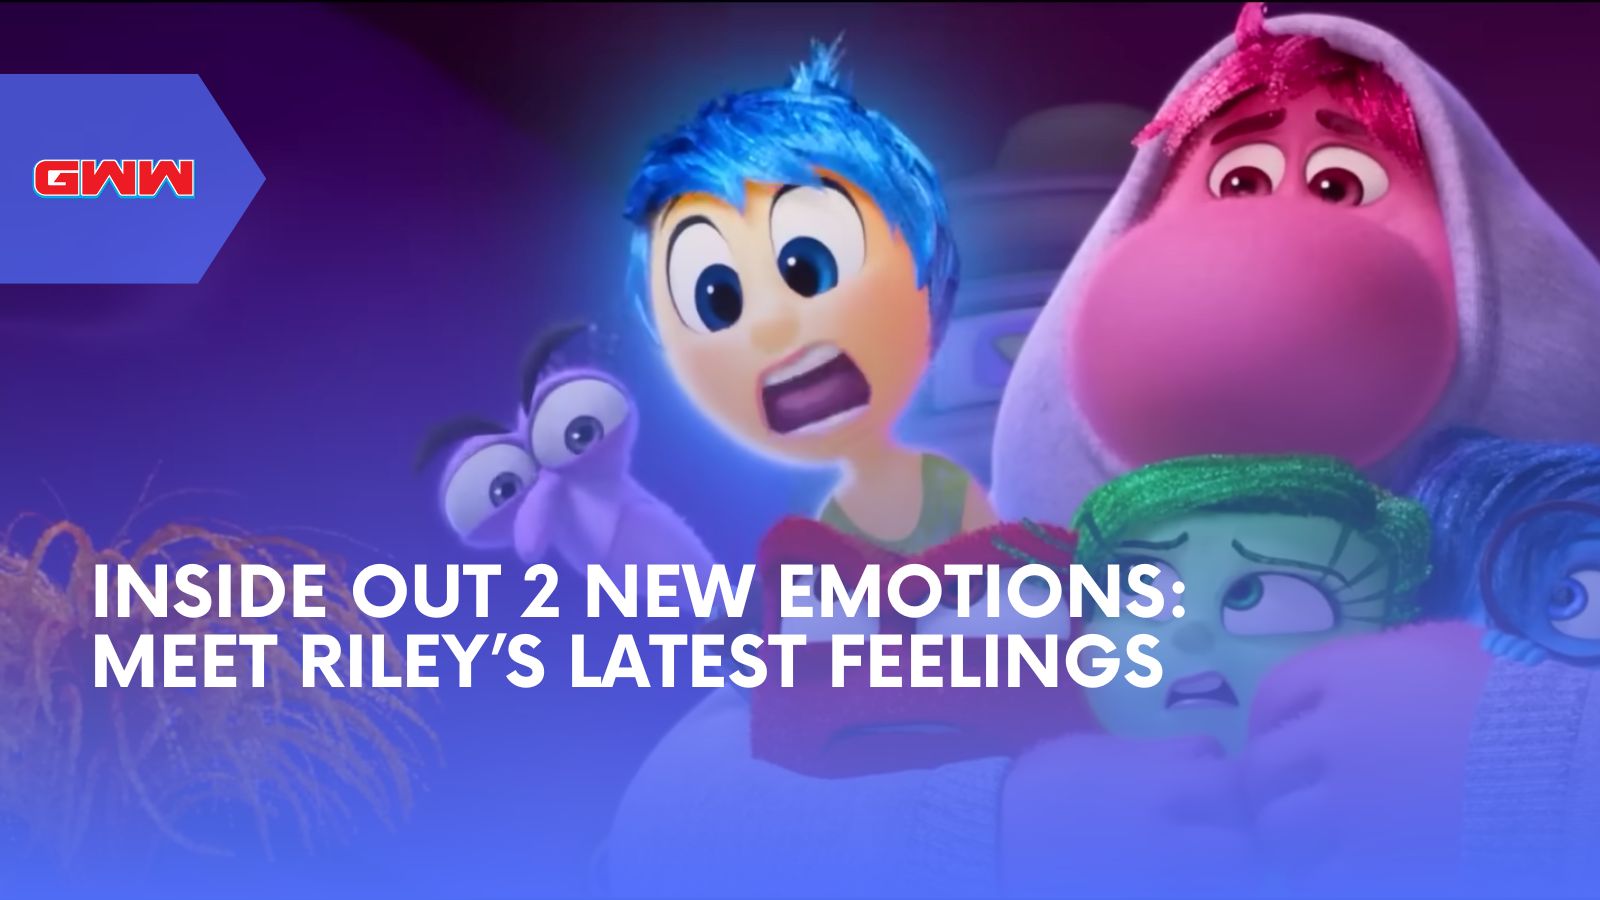 Inside Out 2 New Emotions: Meet Riley’s Latest Feelings